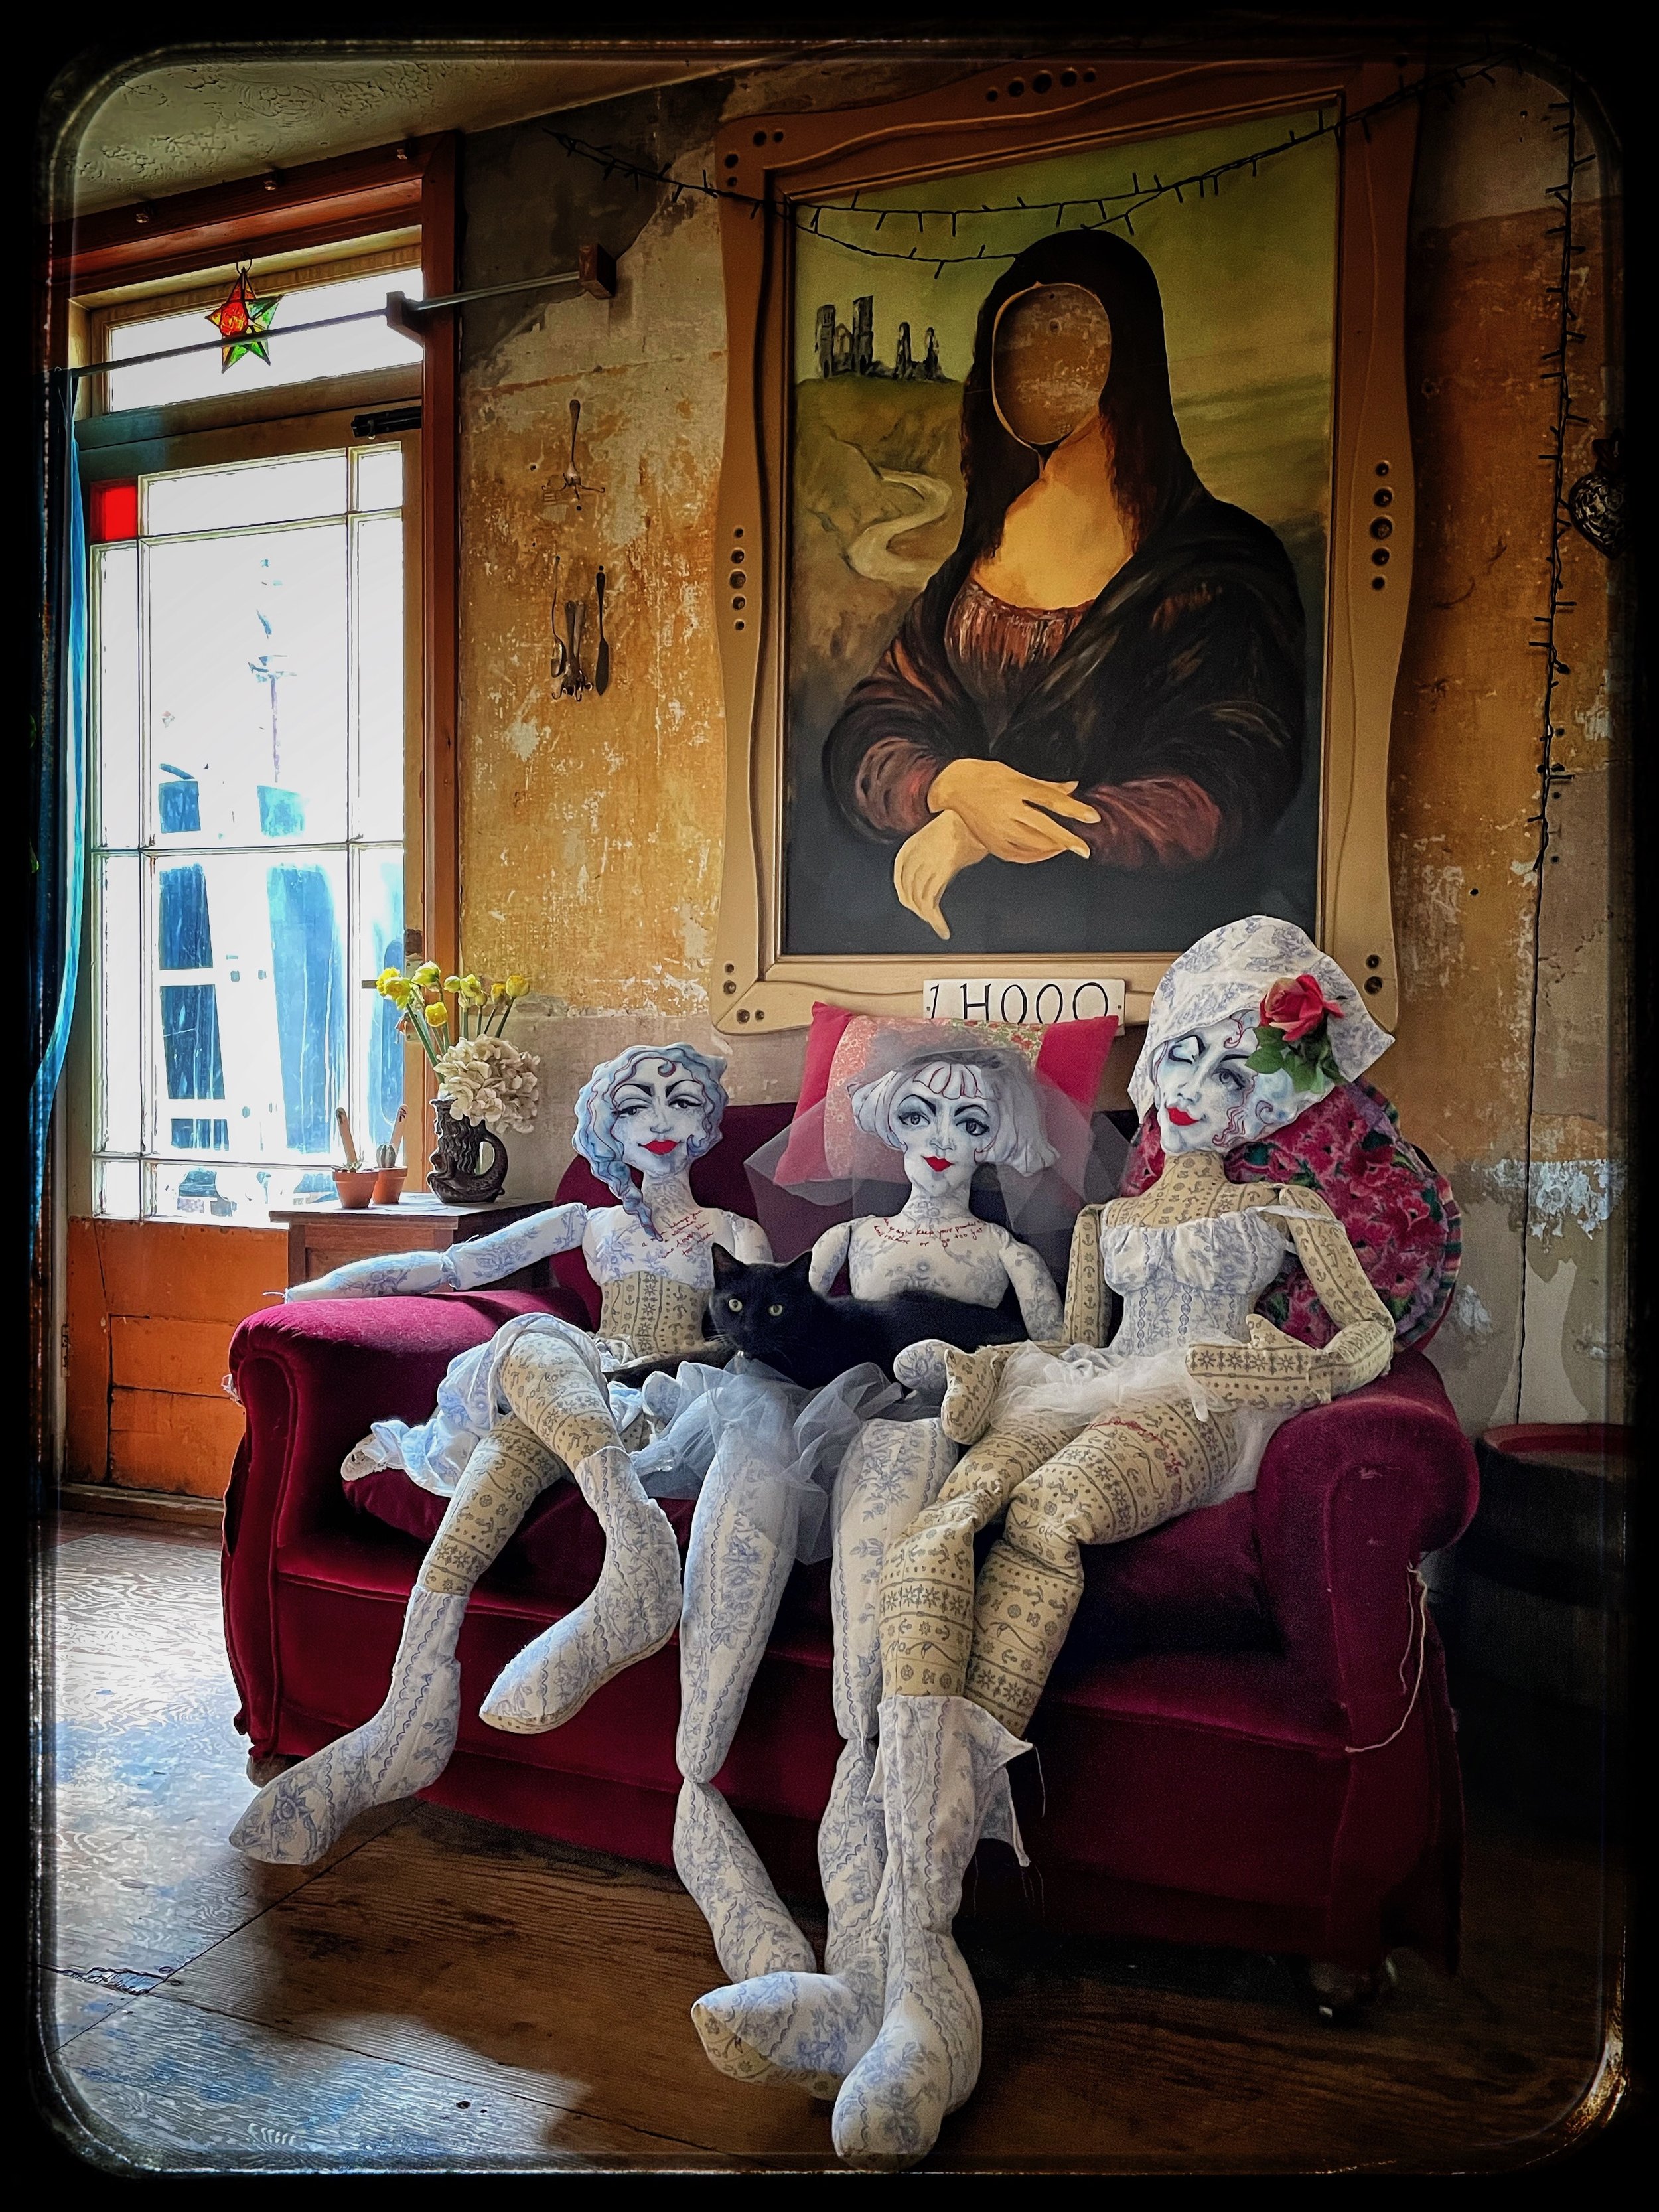 Threepenny Opera dolls at hom with Mona and cat copy.jpeg